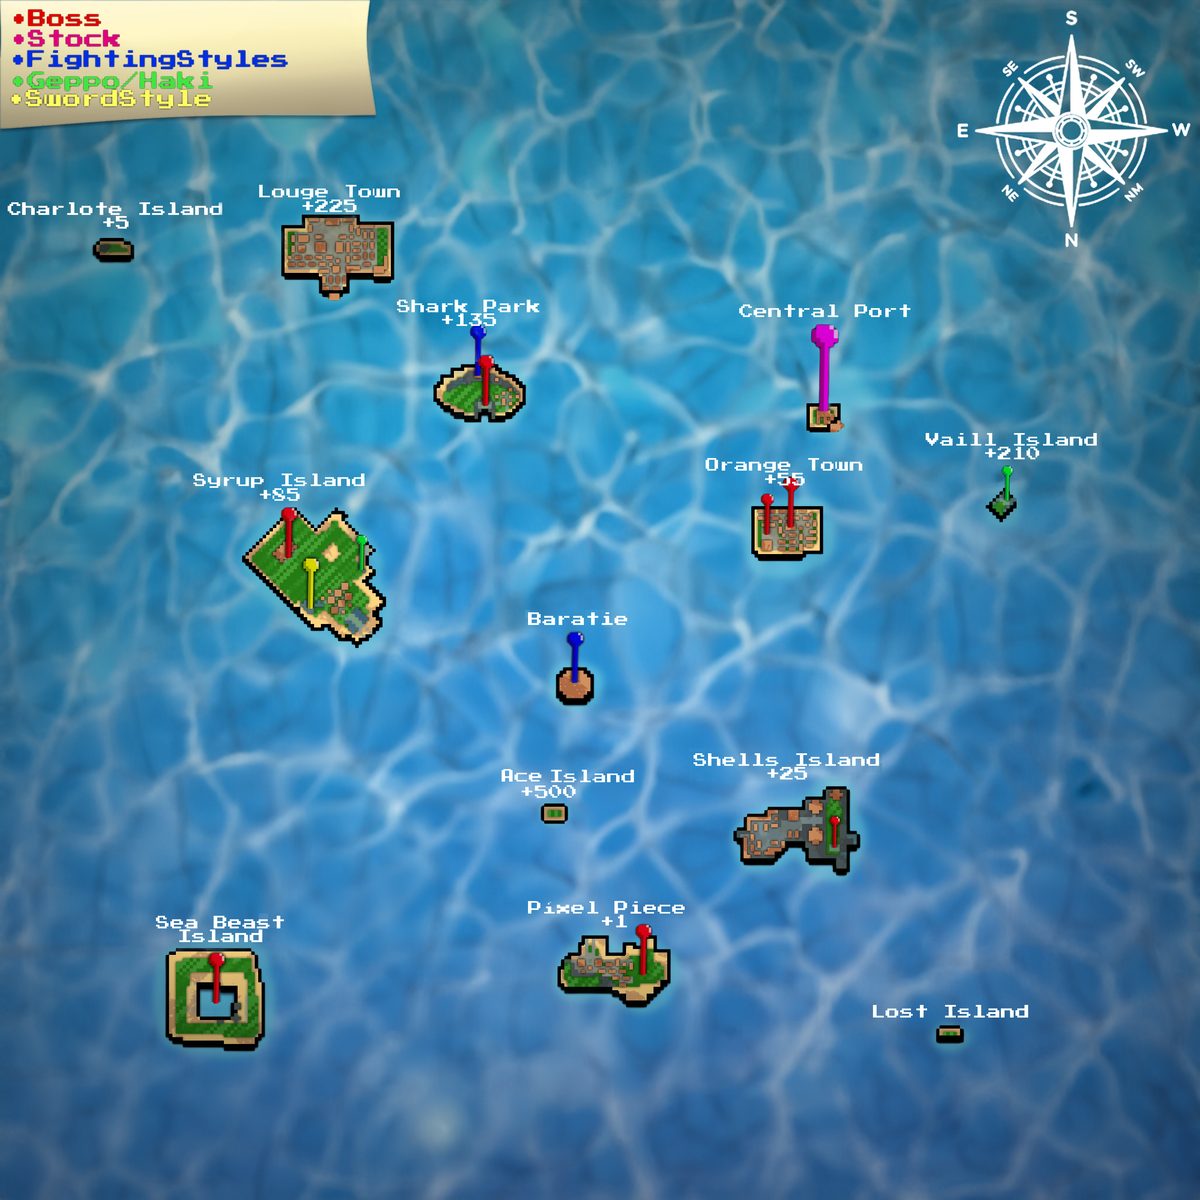 Pixel Piece Sea Beast: Location, how to beat & rewards